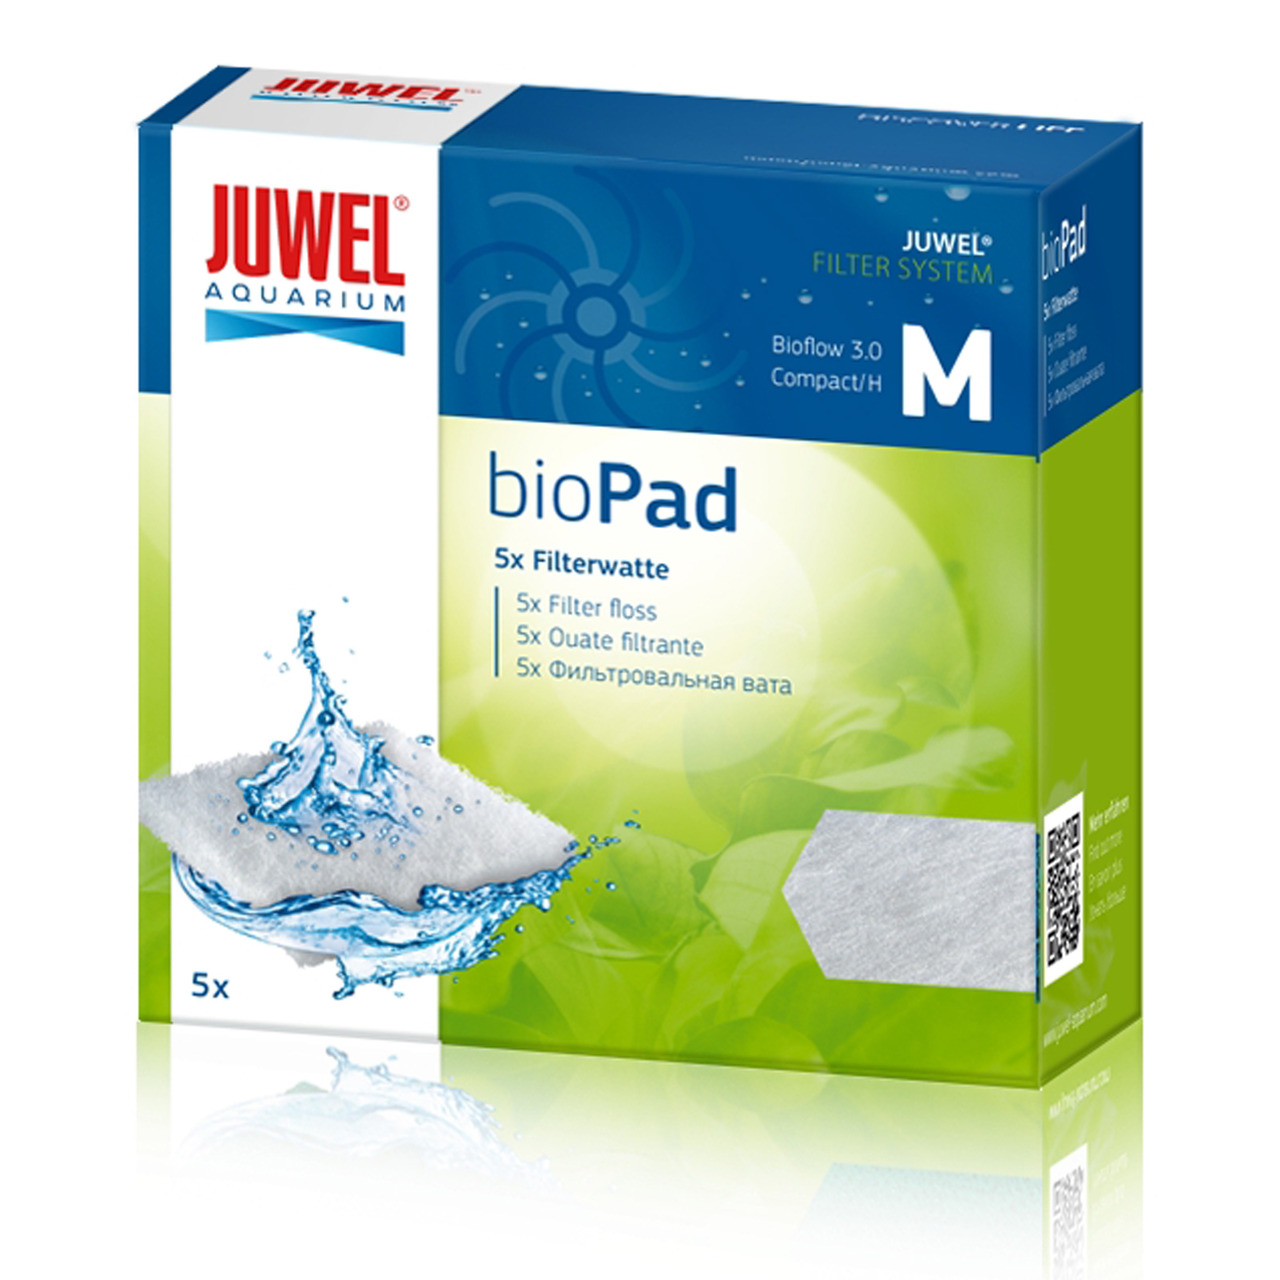 Juwel bioPad Filterwatte Aquarium Filtermedium M